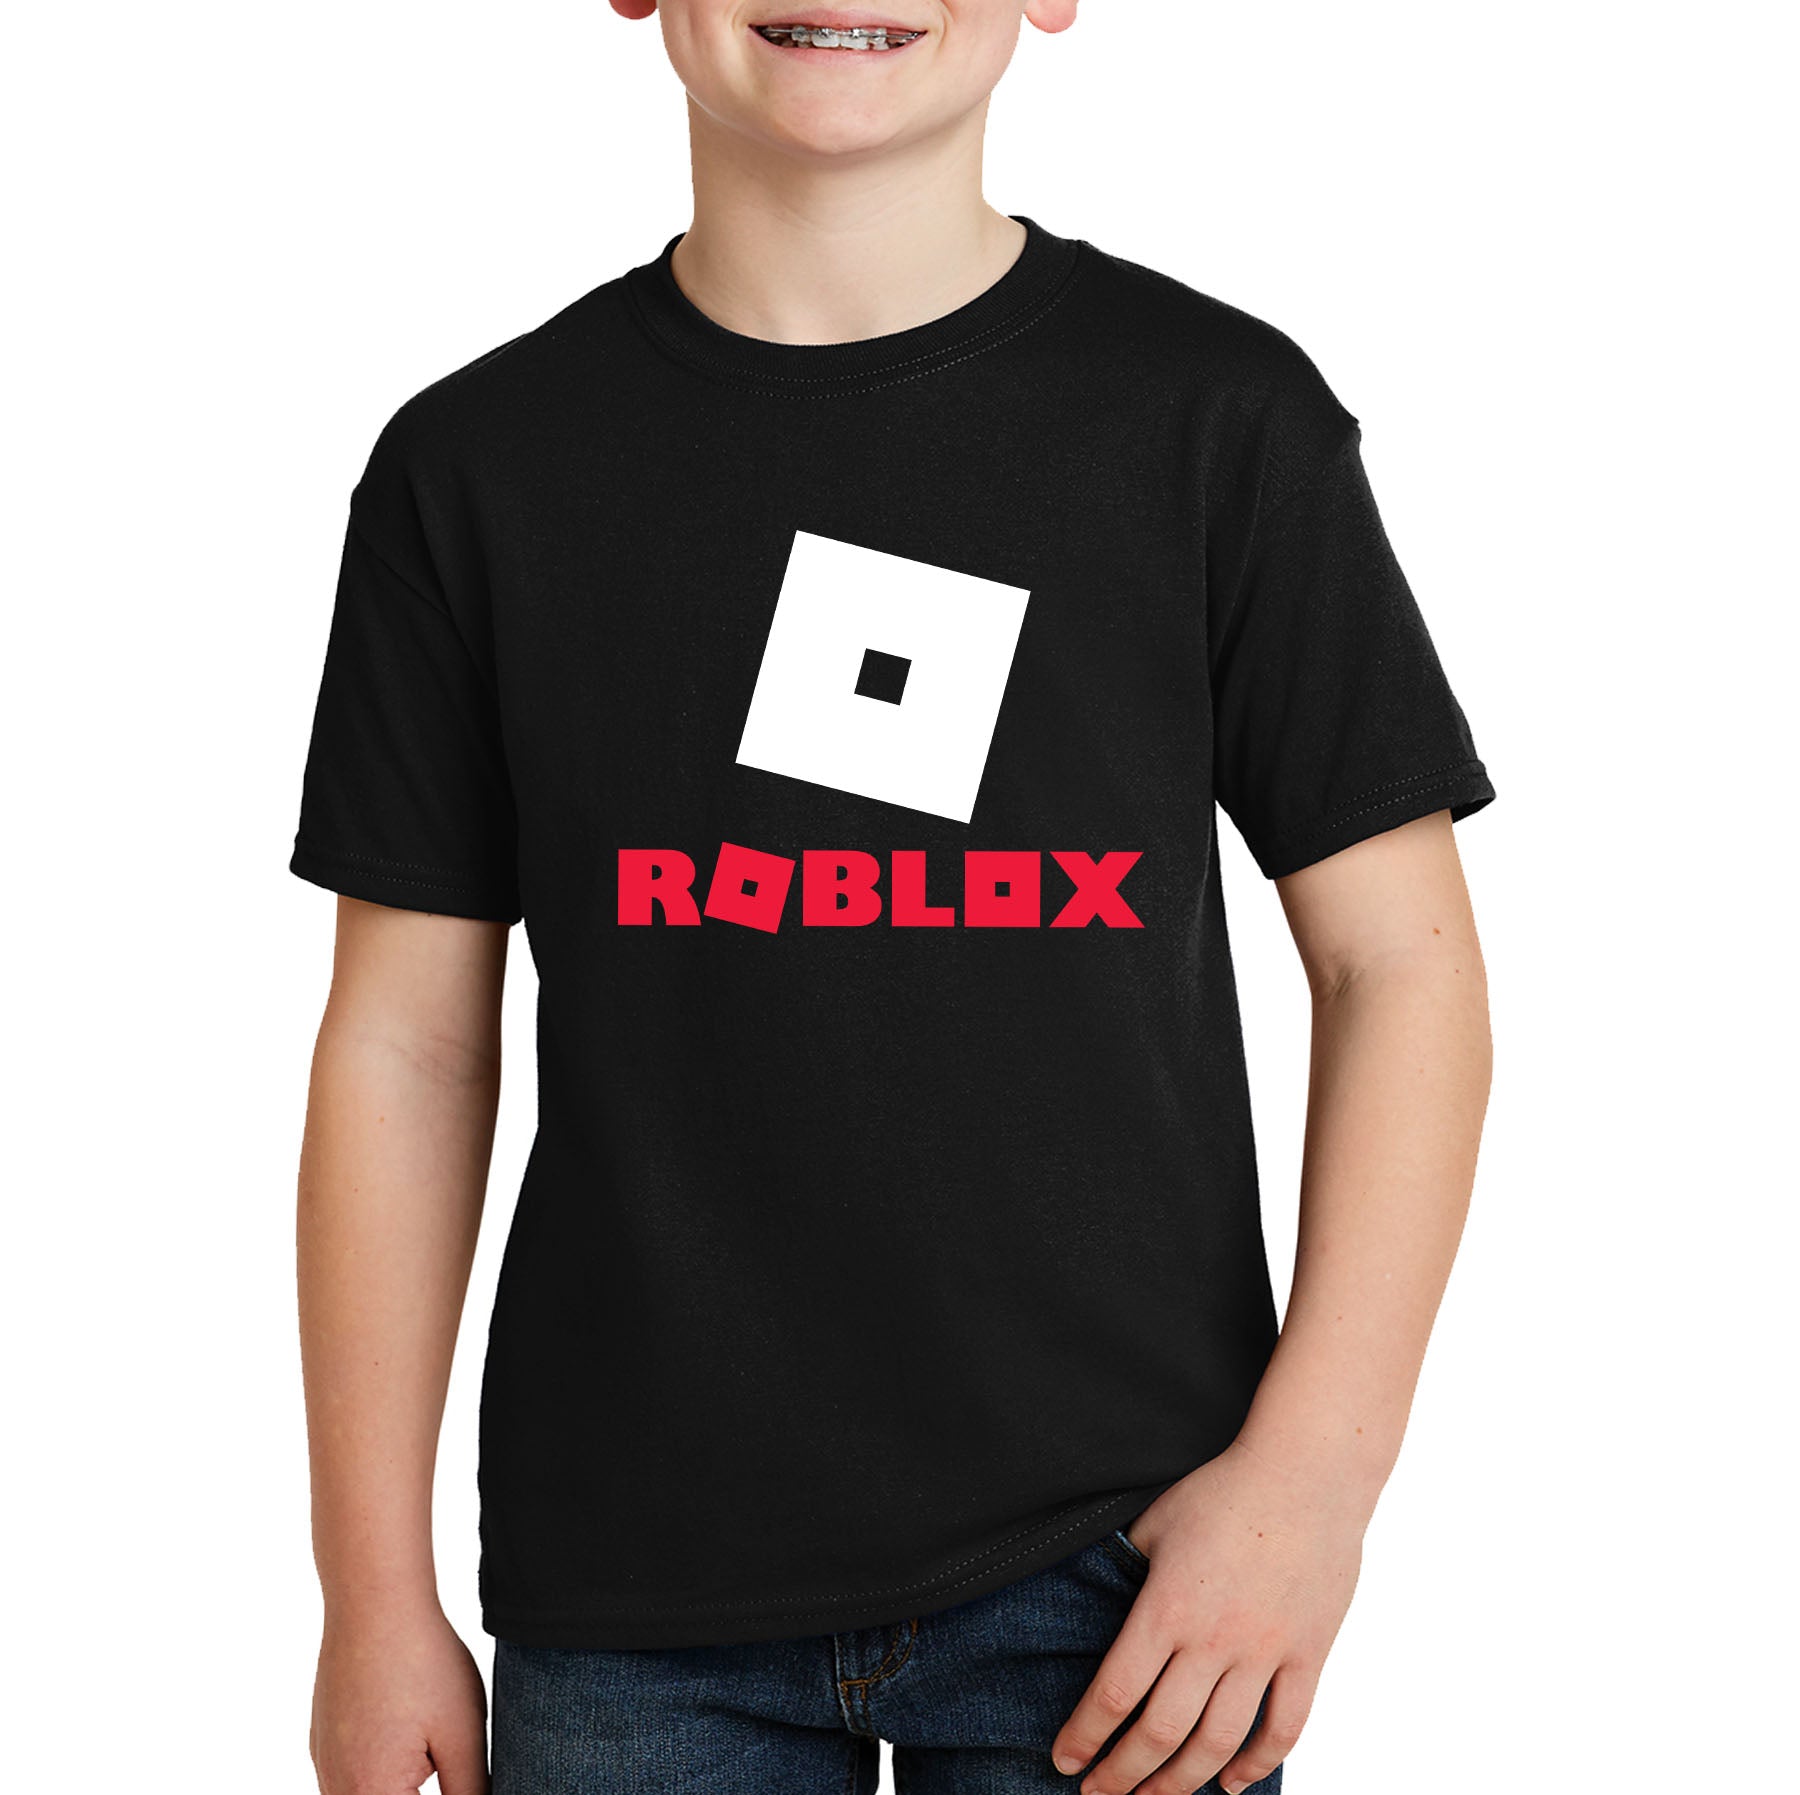 Roblox T Shirt Buy